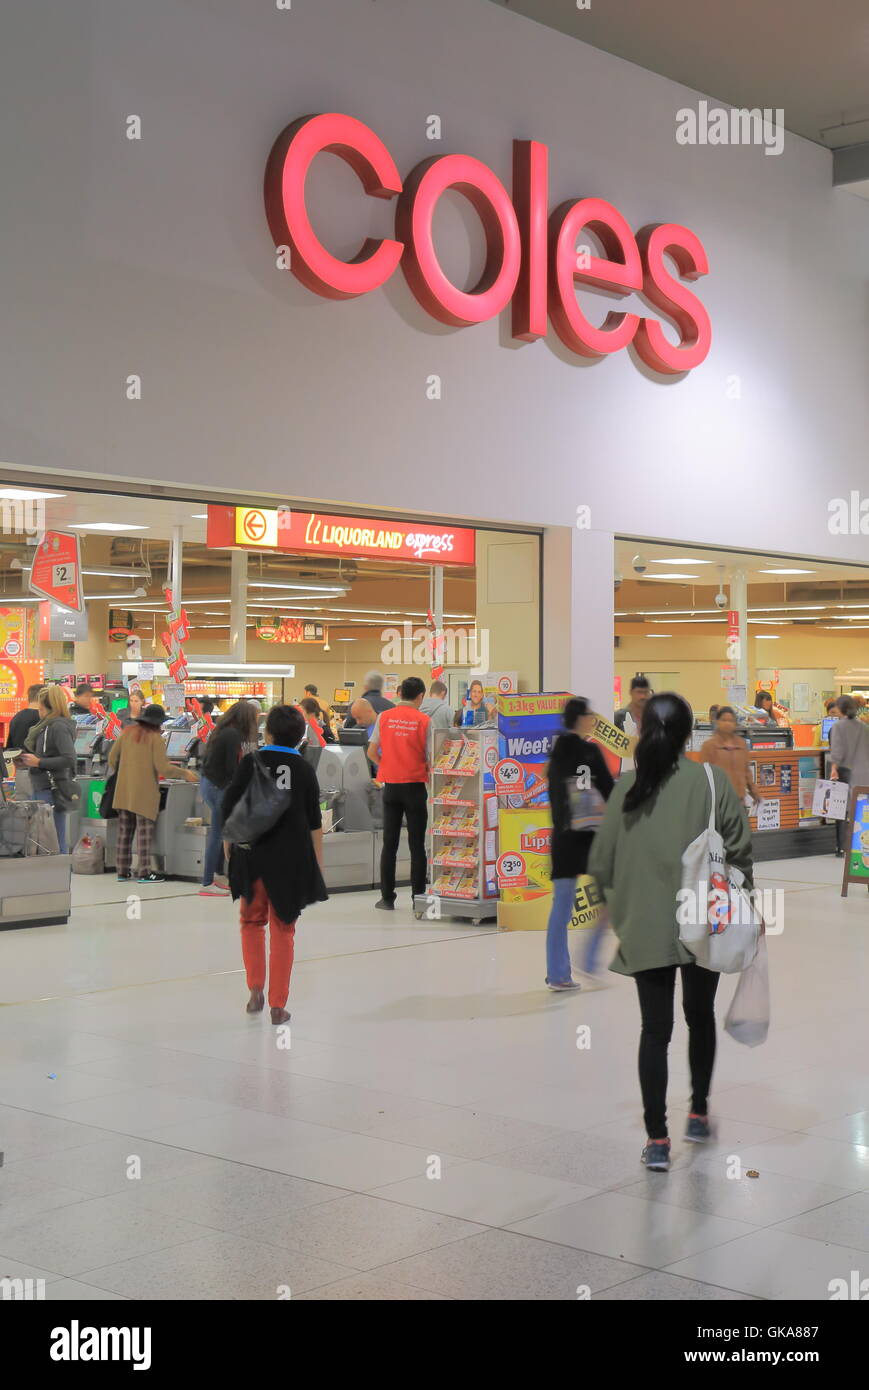 People shop at Coles Supermarket in Melbourne Australia Stock Photo - Alamy